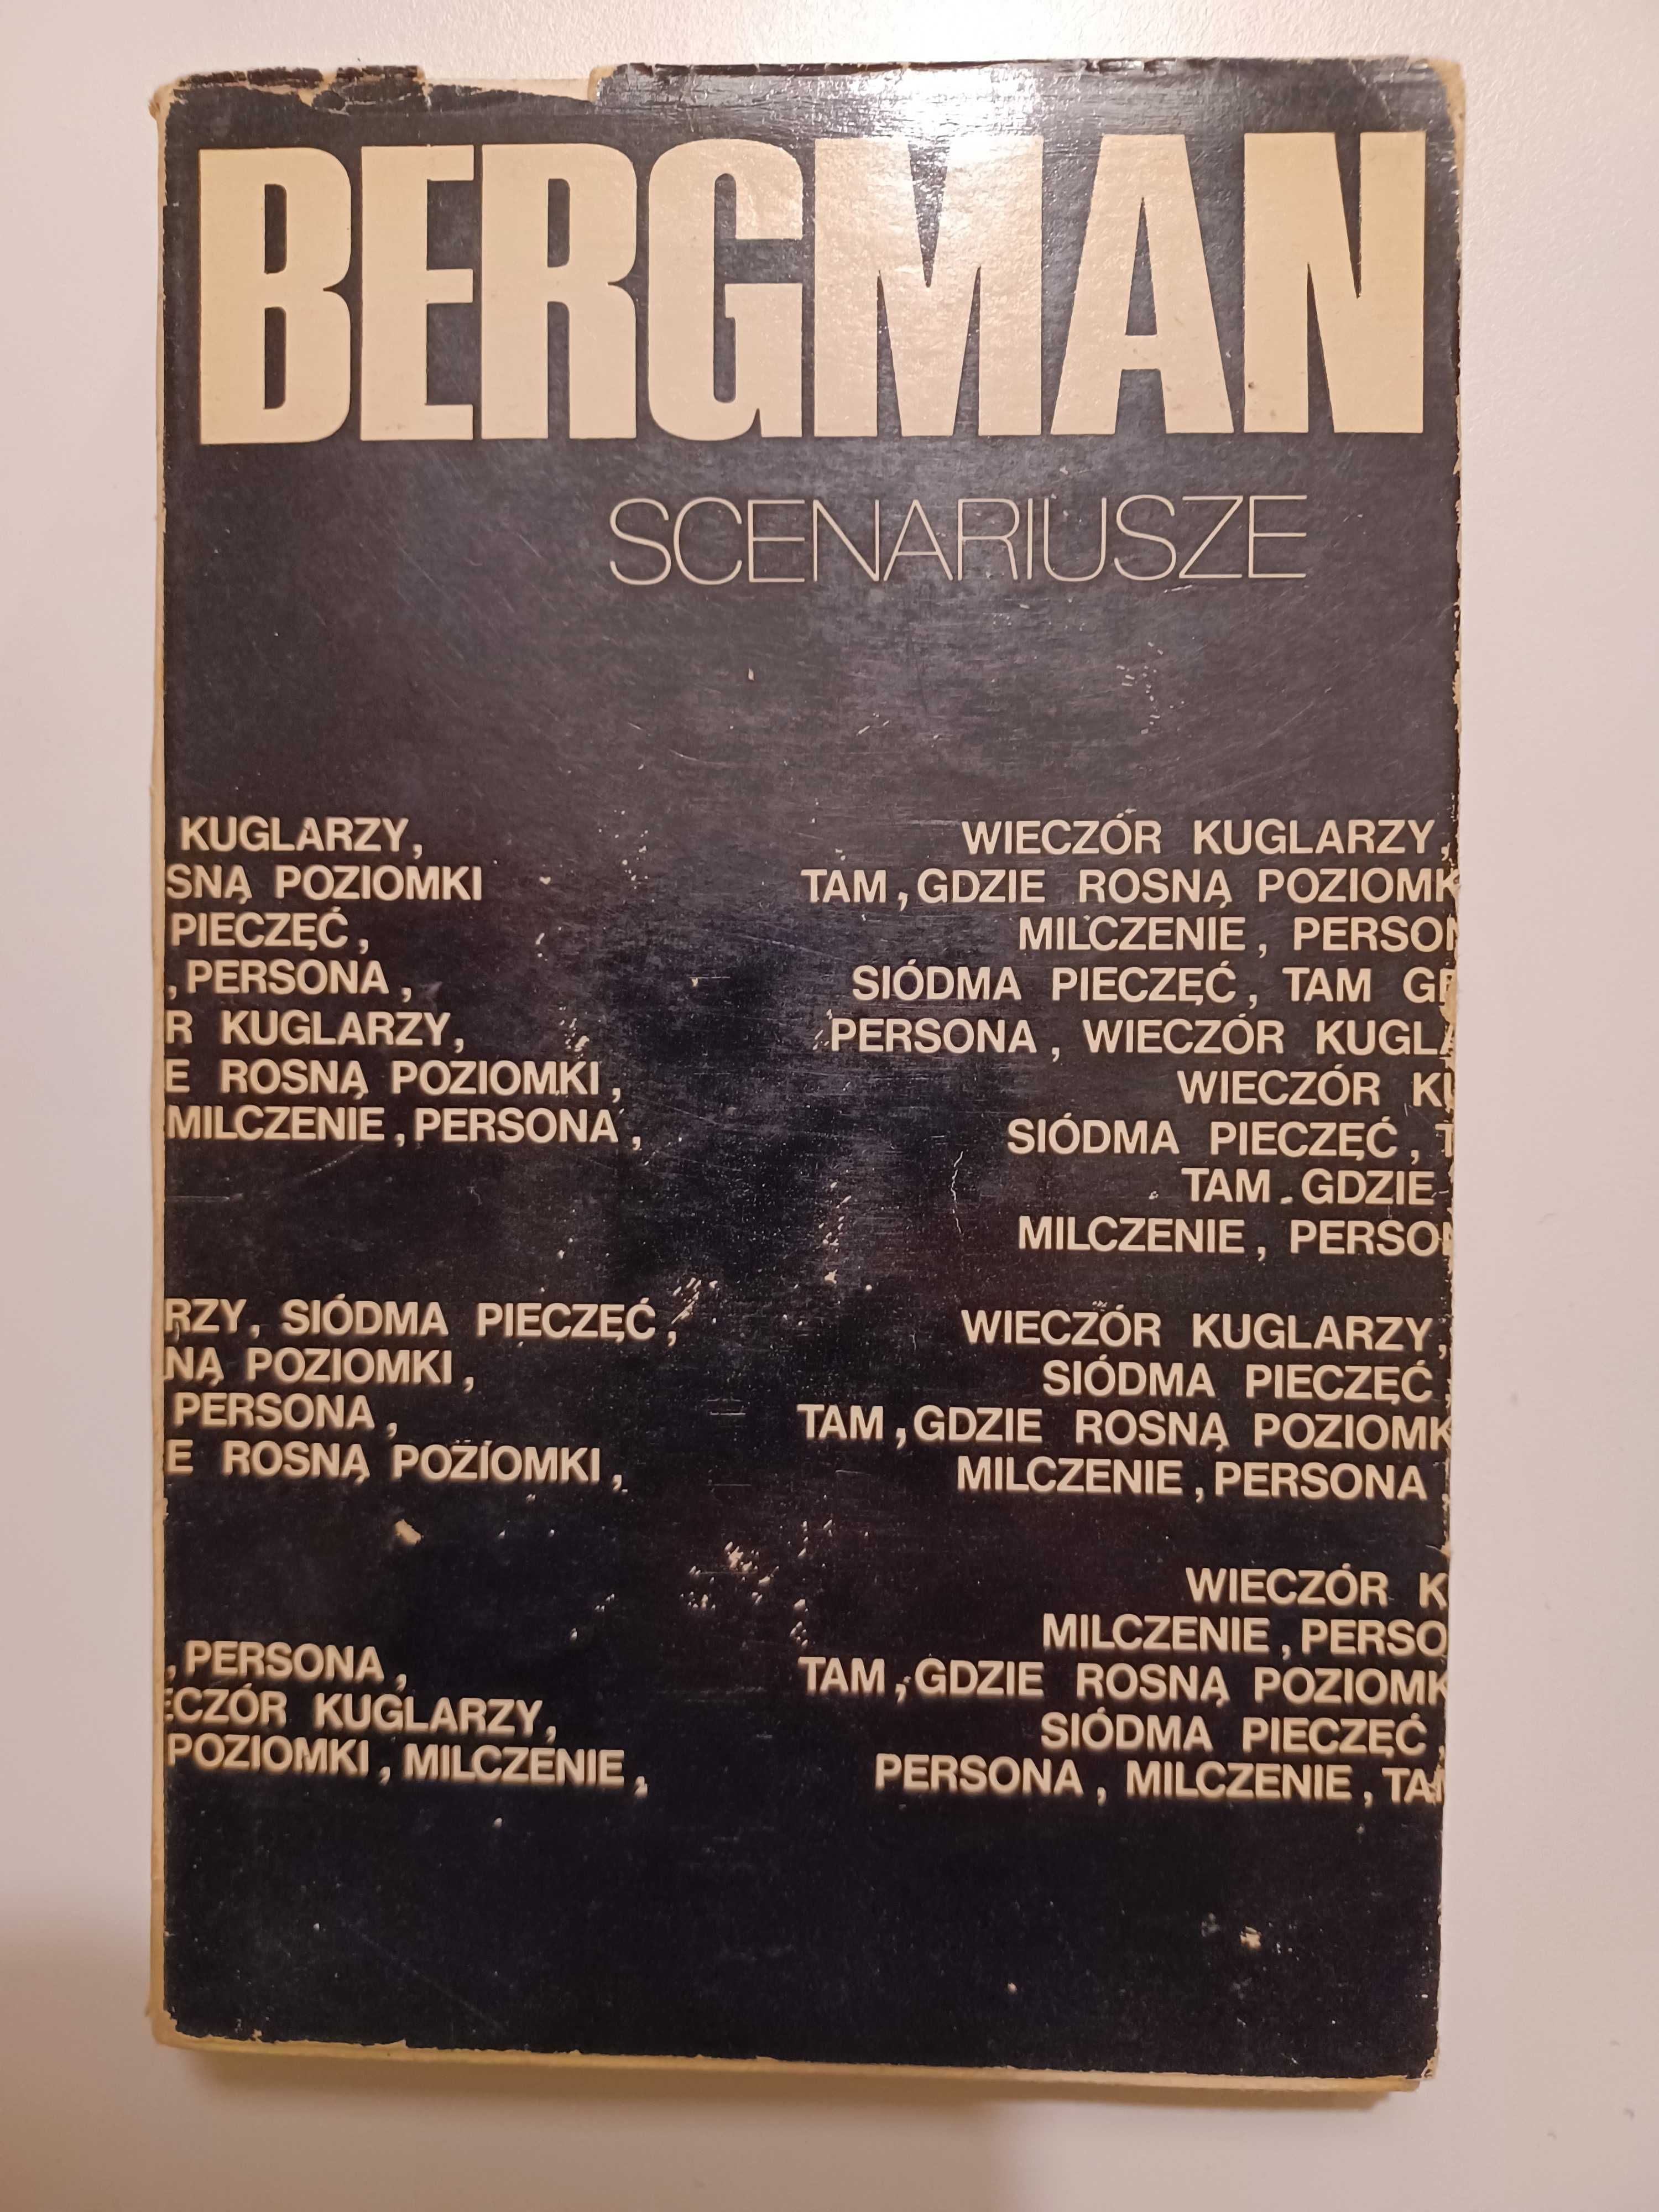 Ingmar Bergman - Scenariusze